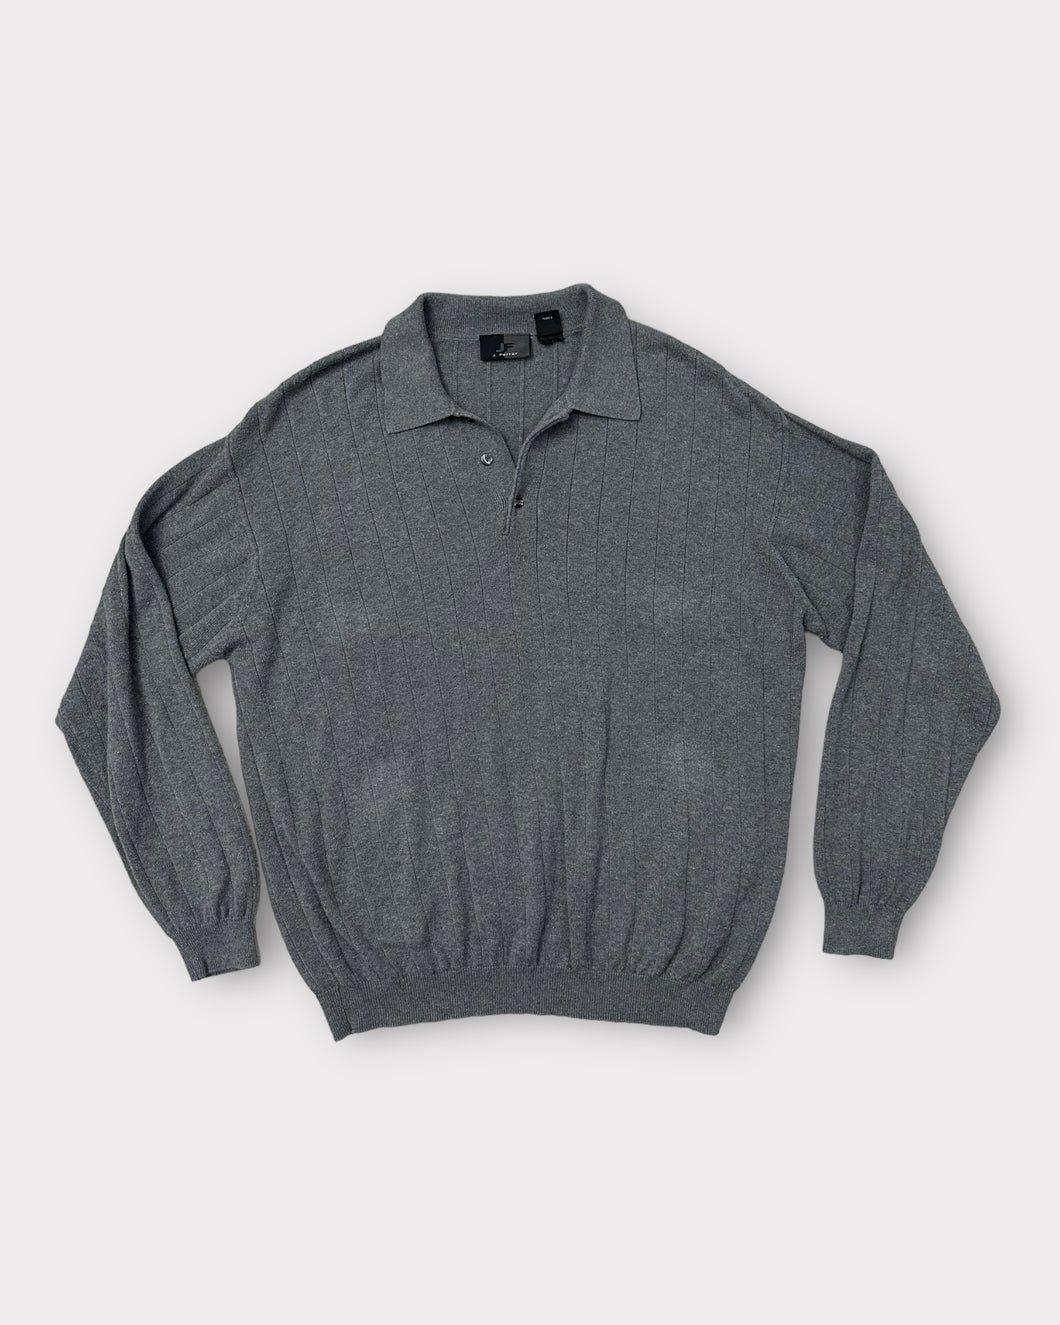 J. Ferrar Vintage Charcoal Grey Collar Knit Pullover (L)